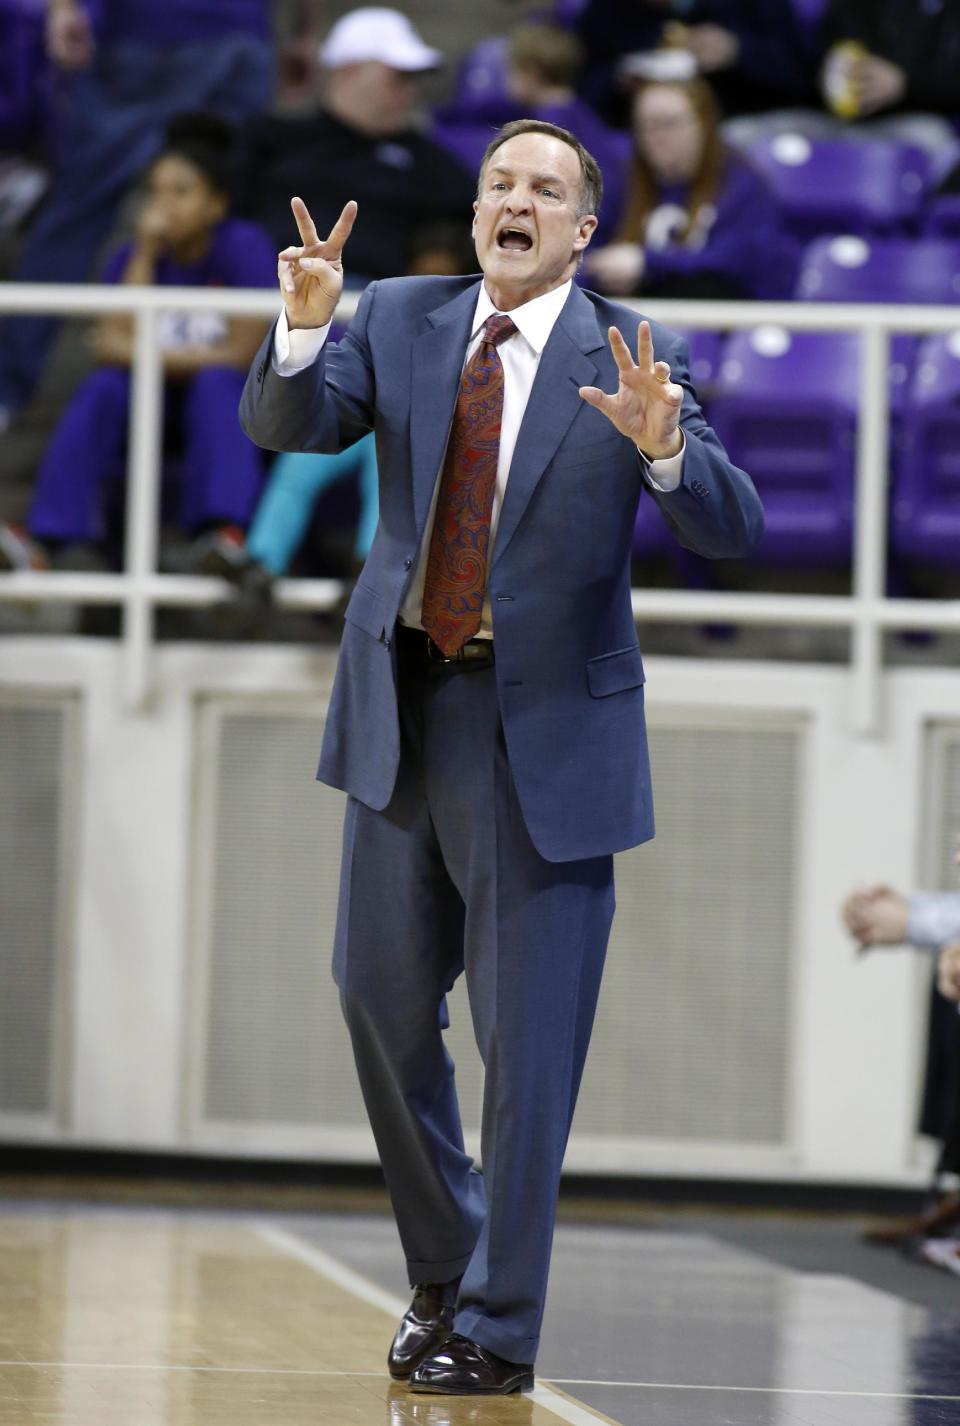 Oklahoma head coach Lon Kruger calls a play in the first half of an NCAA basketball game against TCU Saturday, March 8, 2014, in Fort Worth, Texas. Oklahoma won 97-67. (AP Photo/Sharon Ellman)